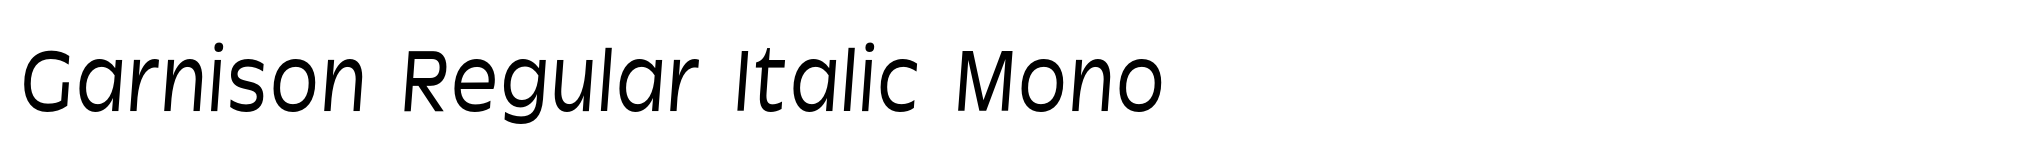 Garnison Regular Italic Mono image